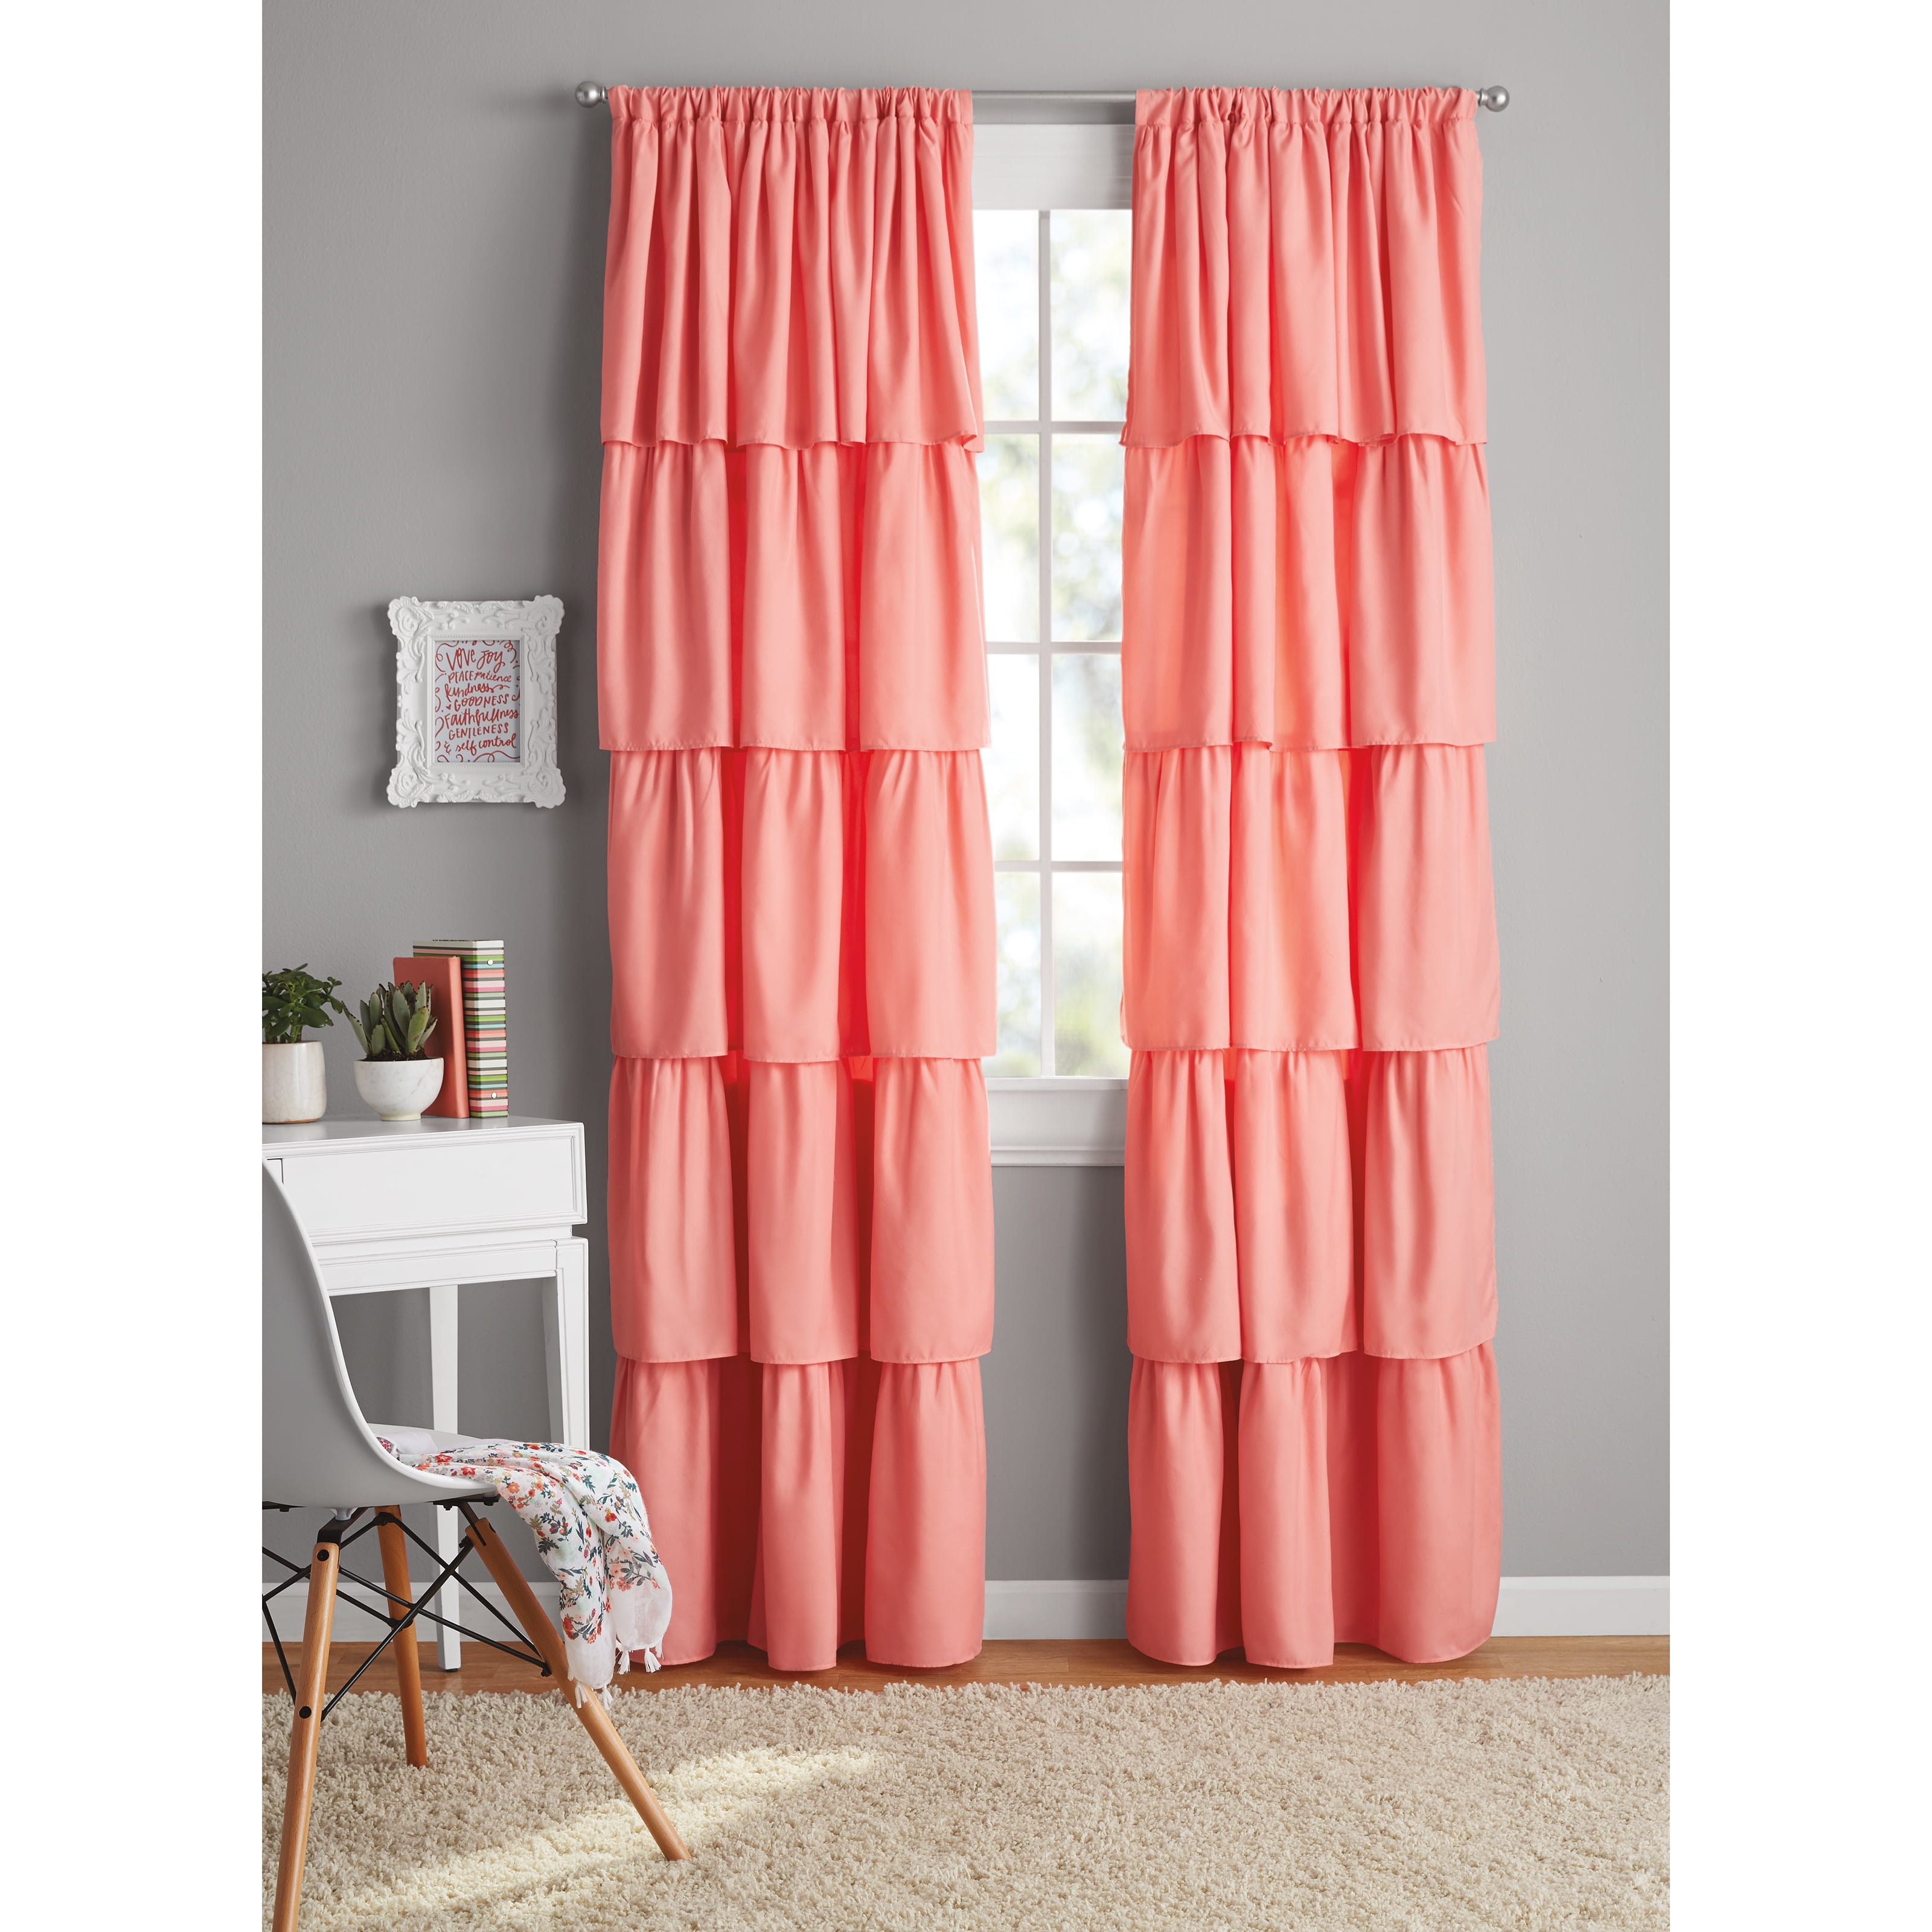 Your Zone Ruffle Girls Bedroom Single Curtain Panel White 42x63 Com